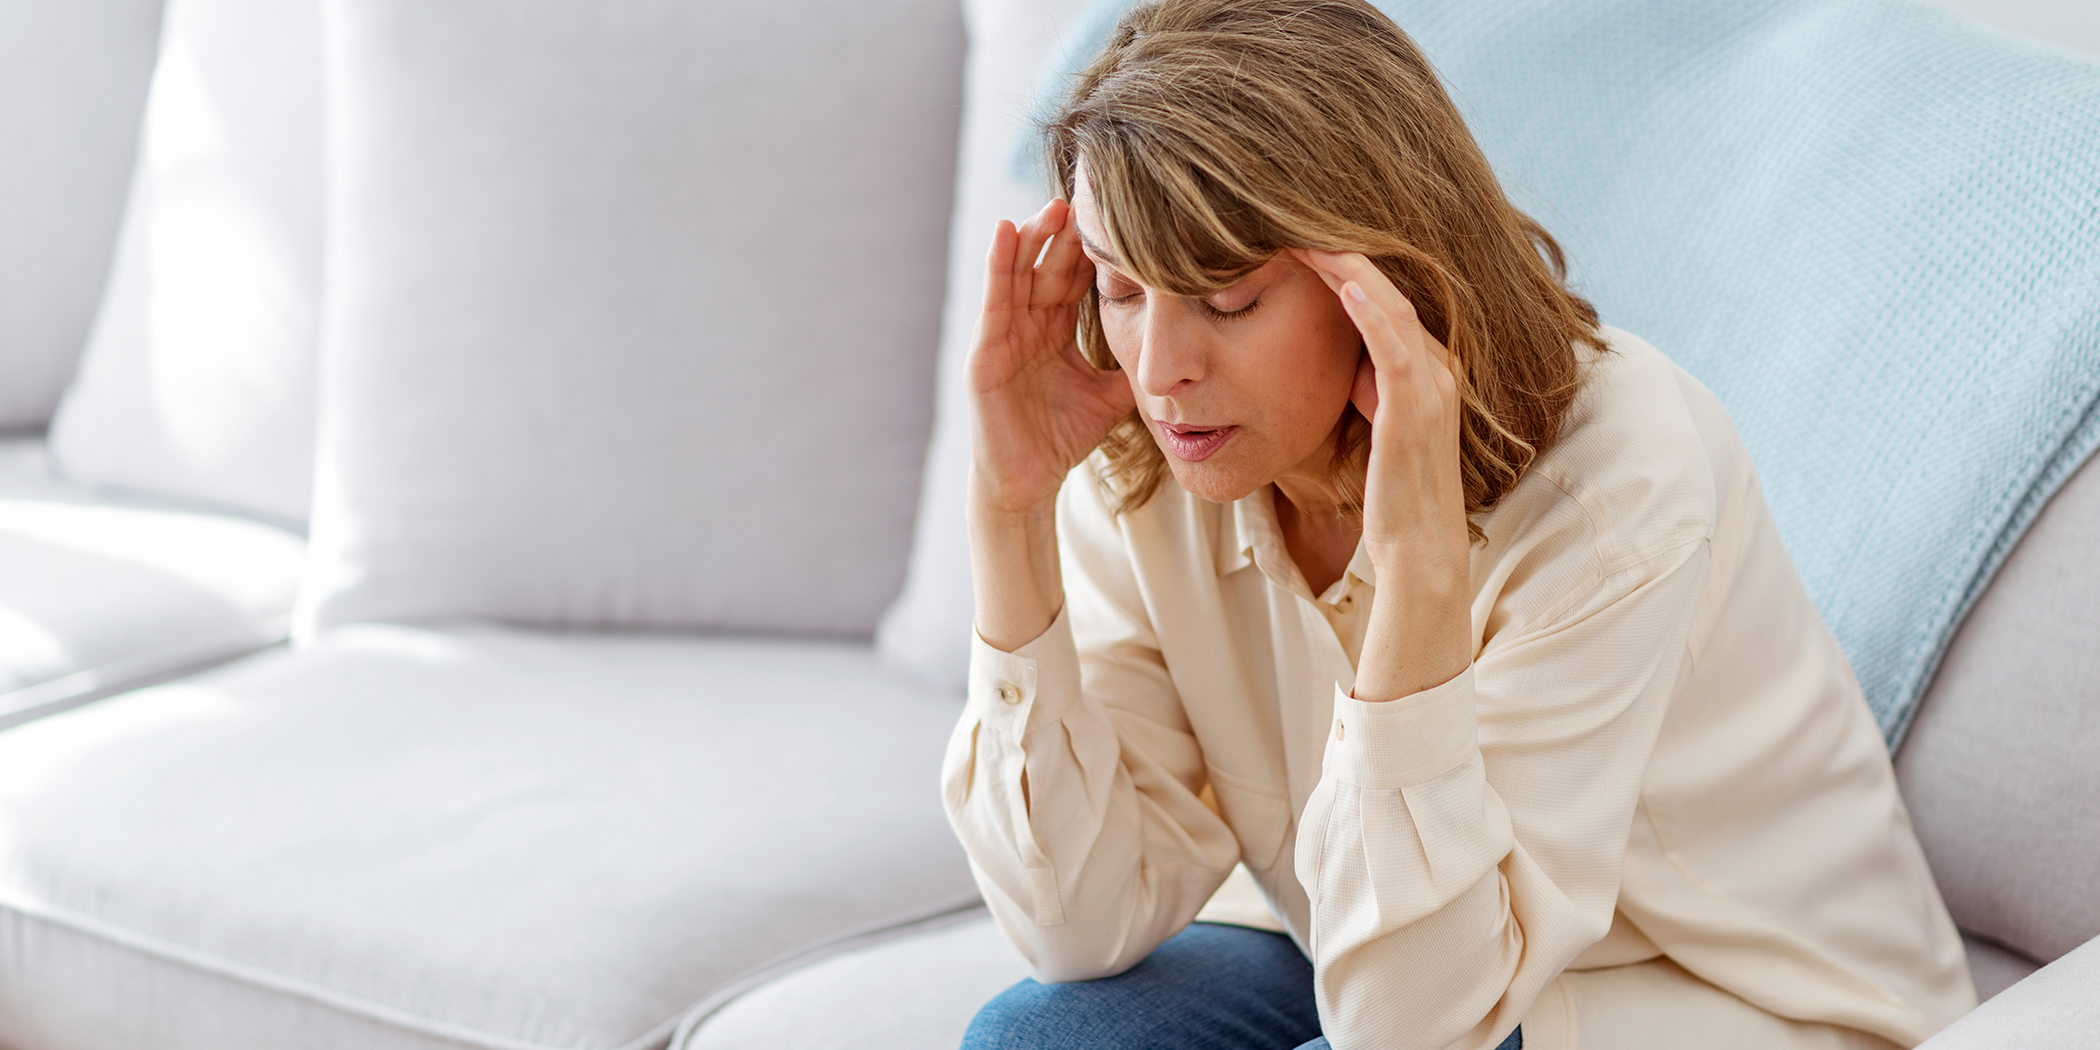 Can Headaches & Migraines Cause Brain Damage?